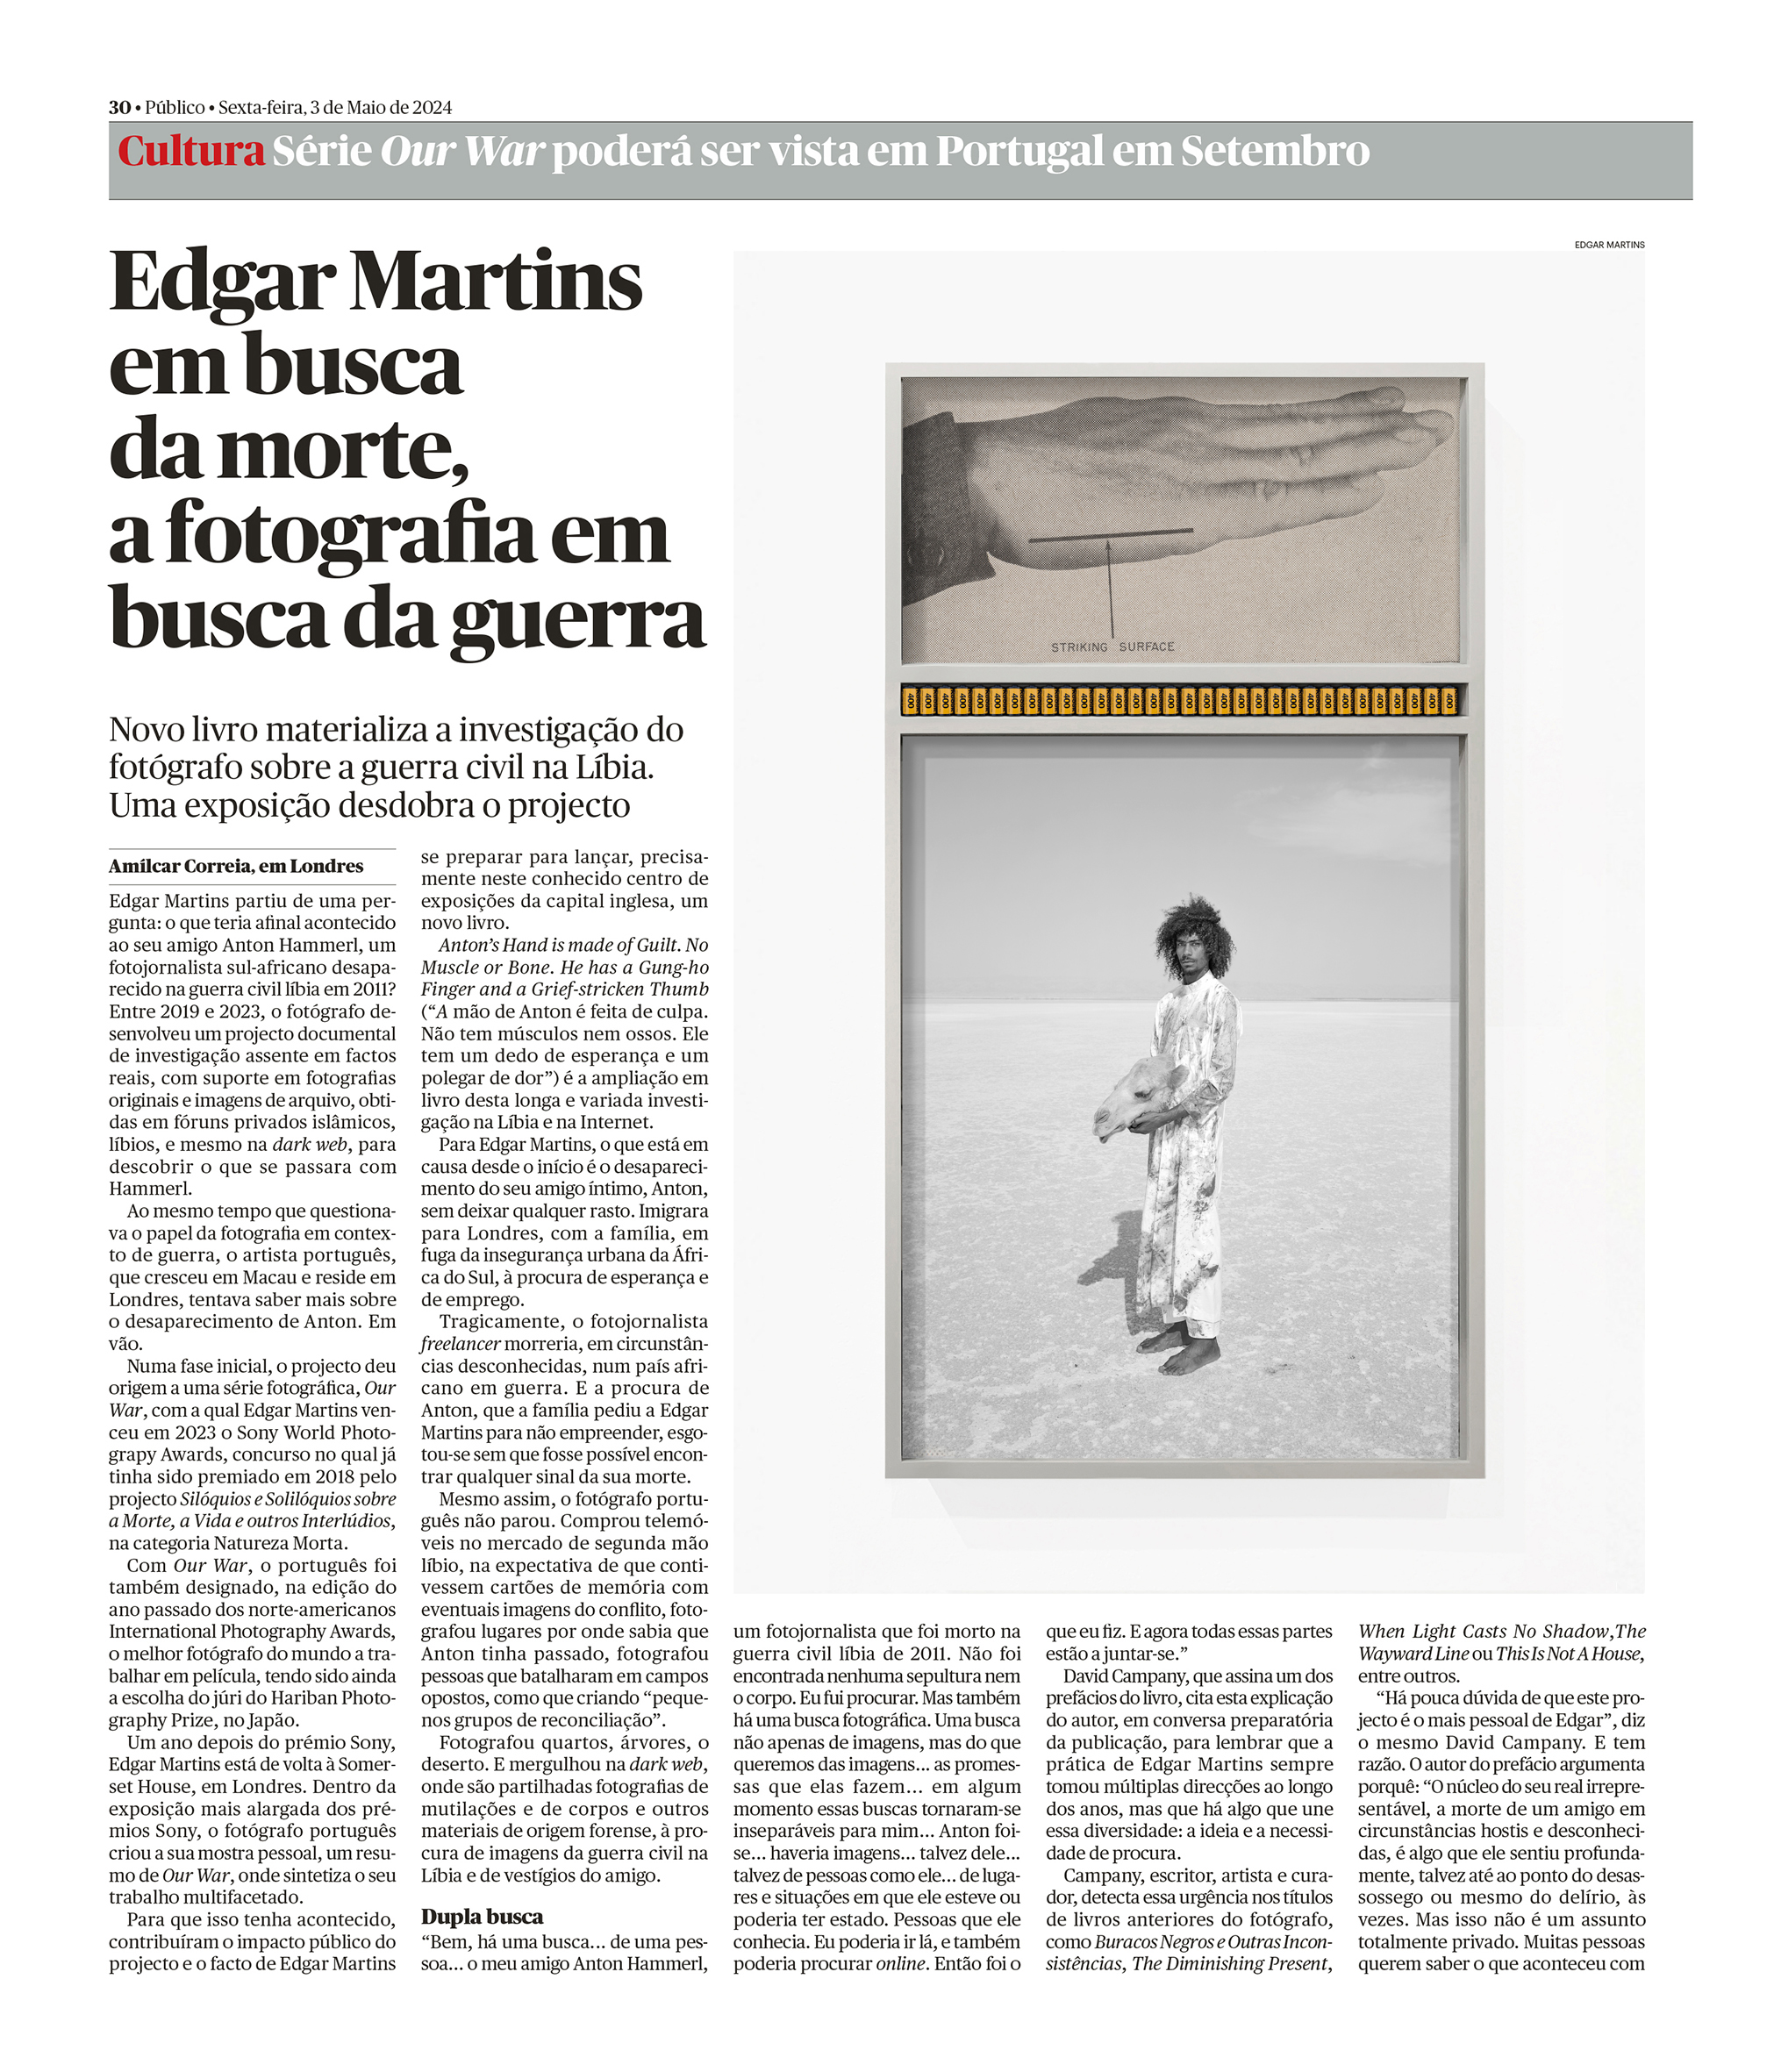 Edgar Martins is interviewed by O Público